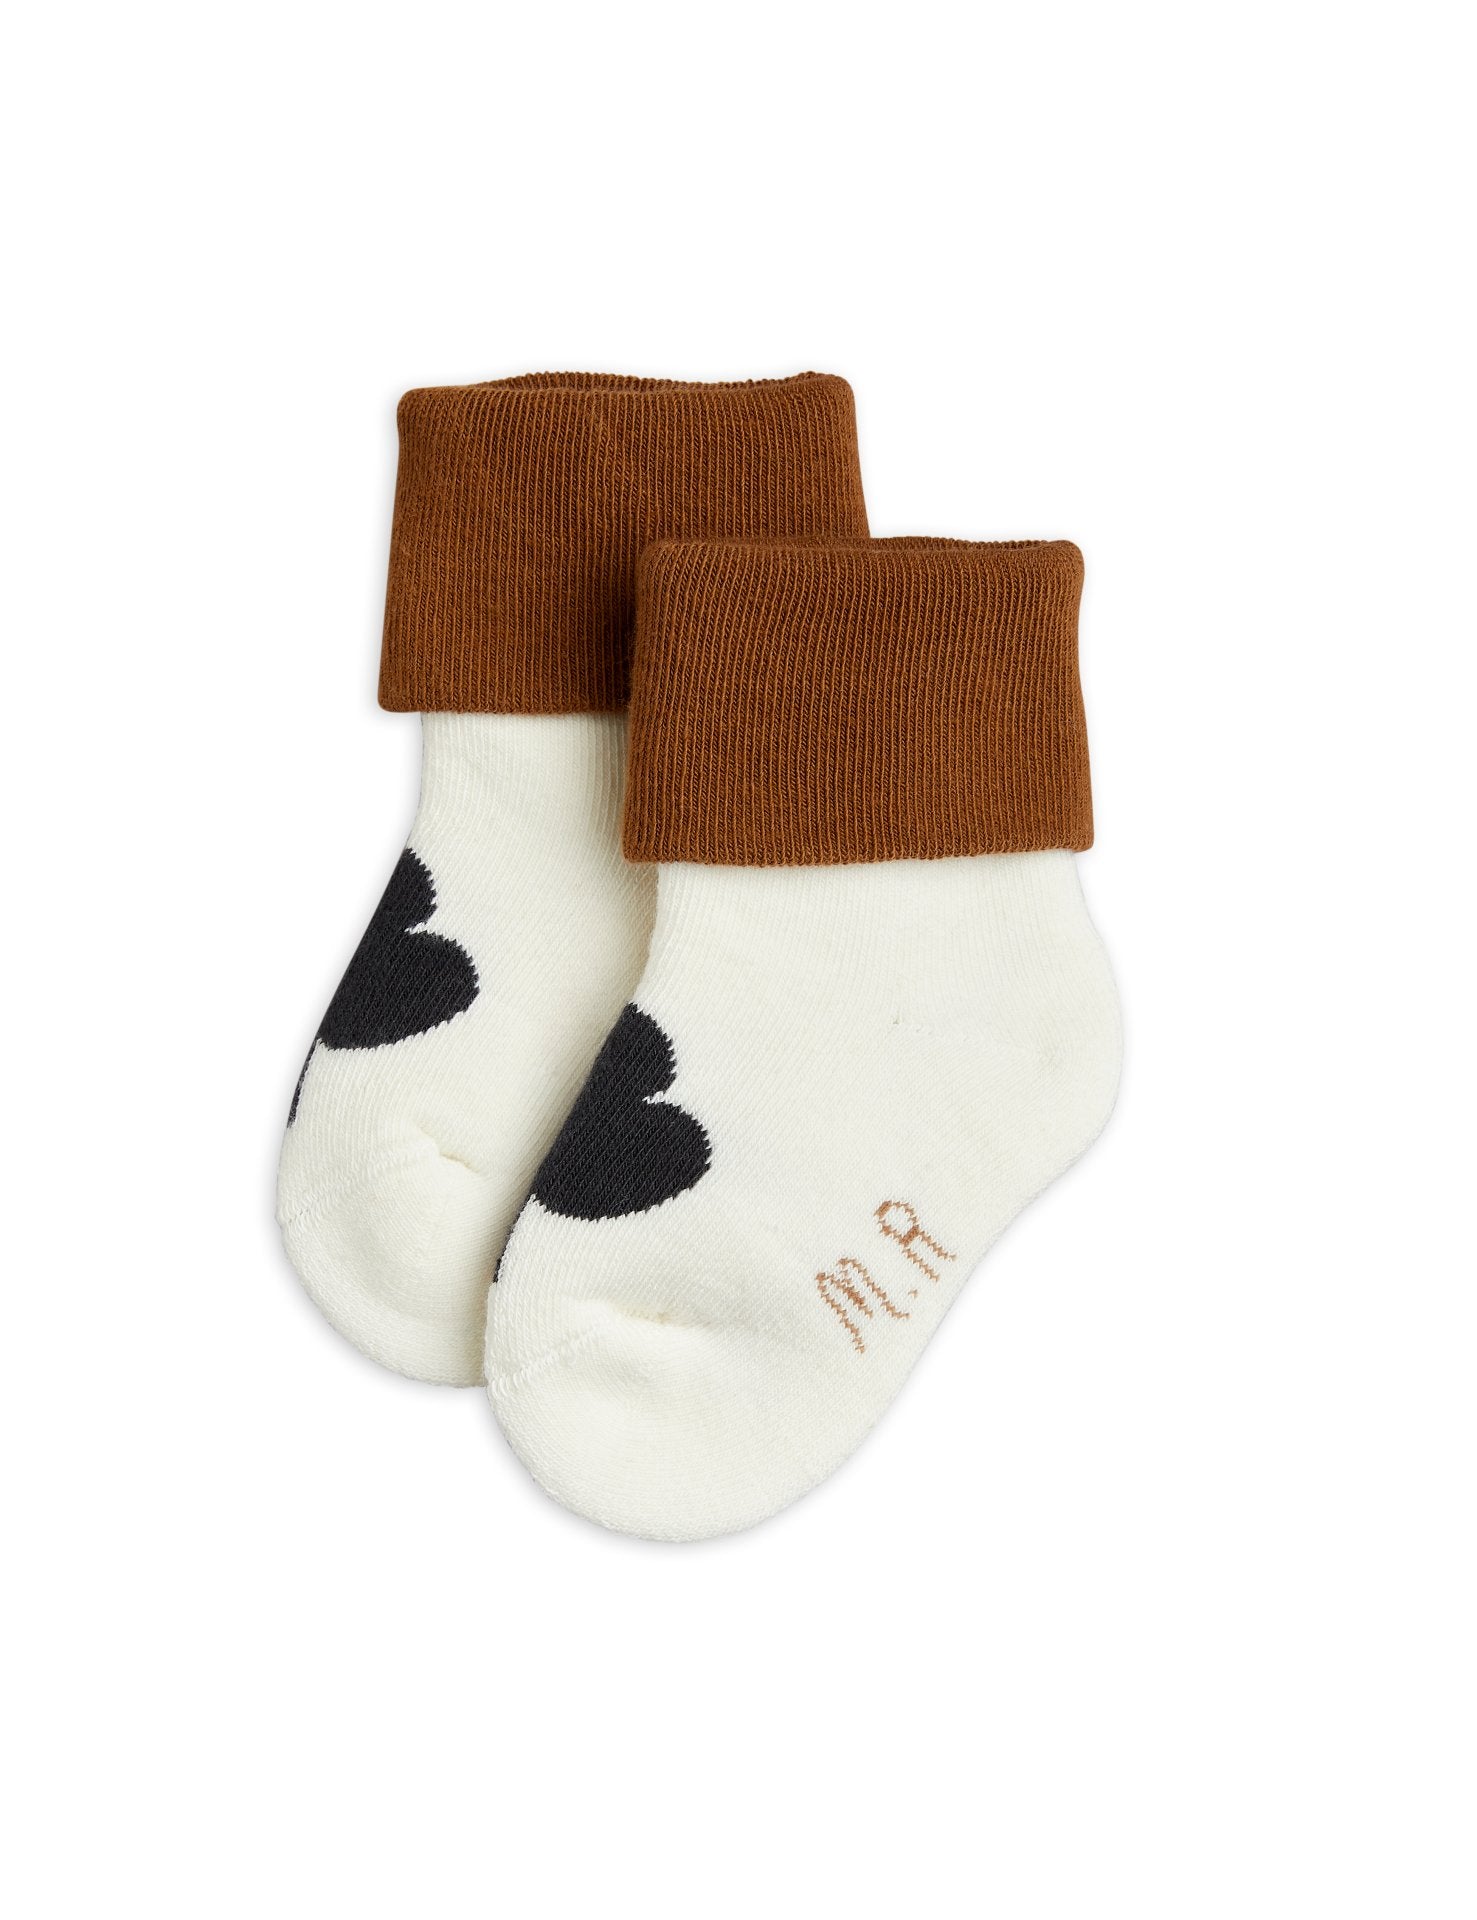 Clover terry baby socks